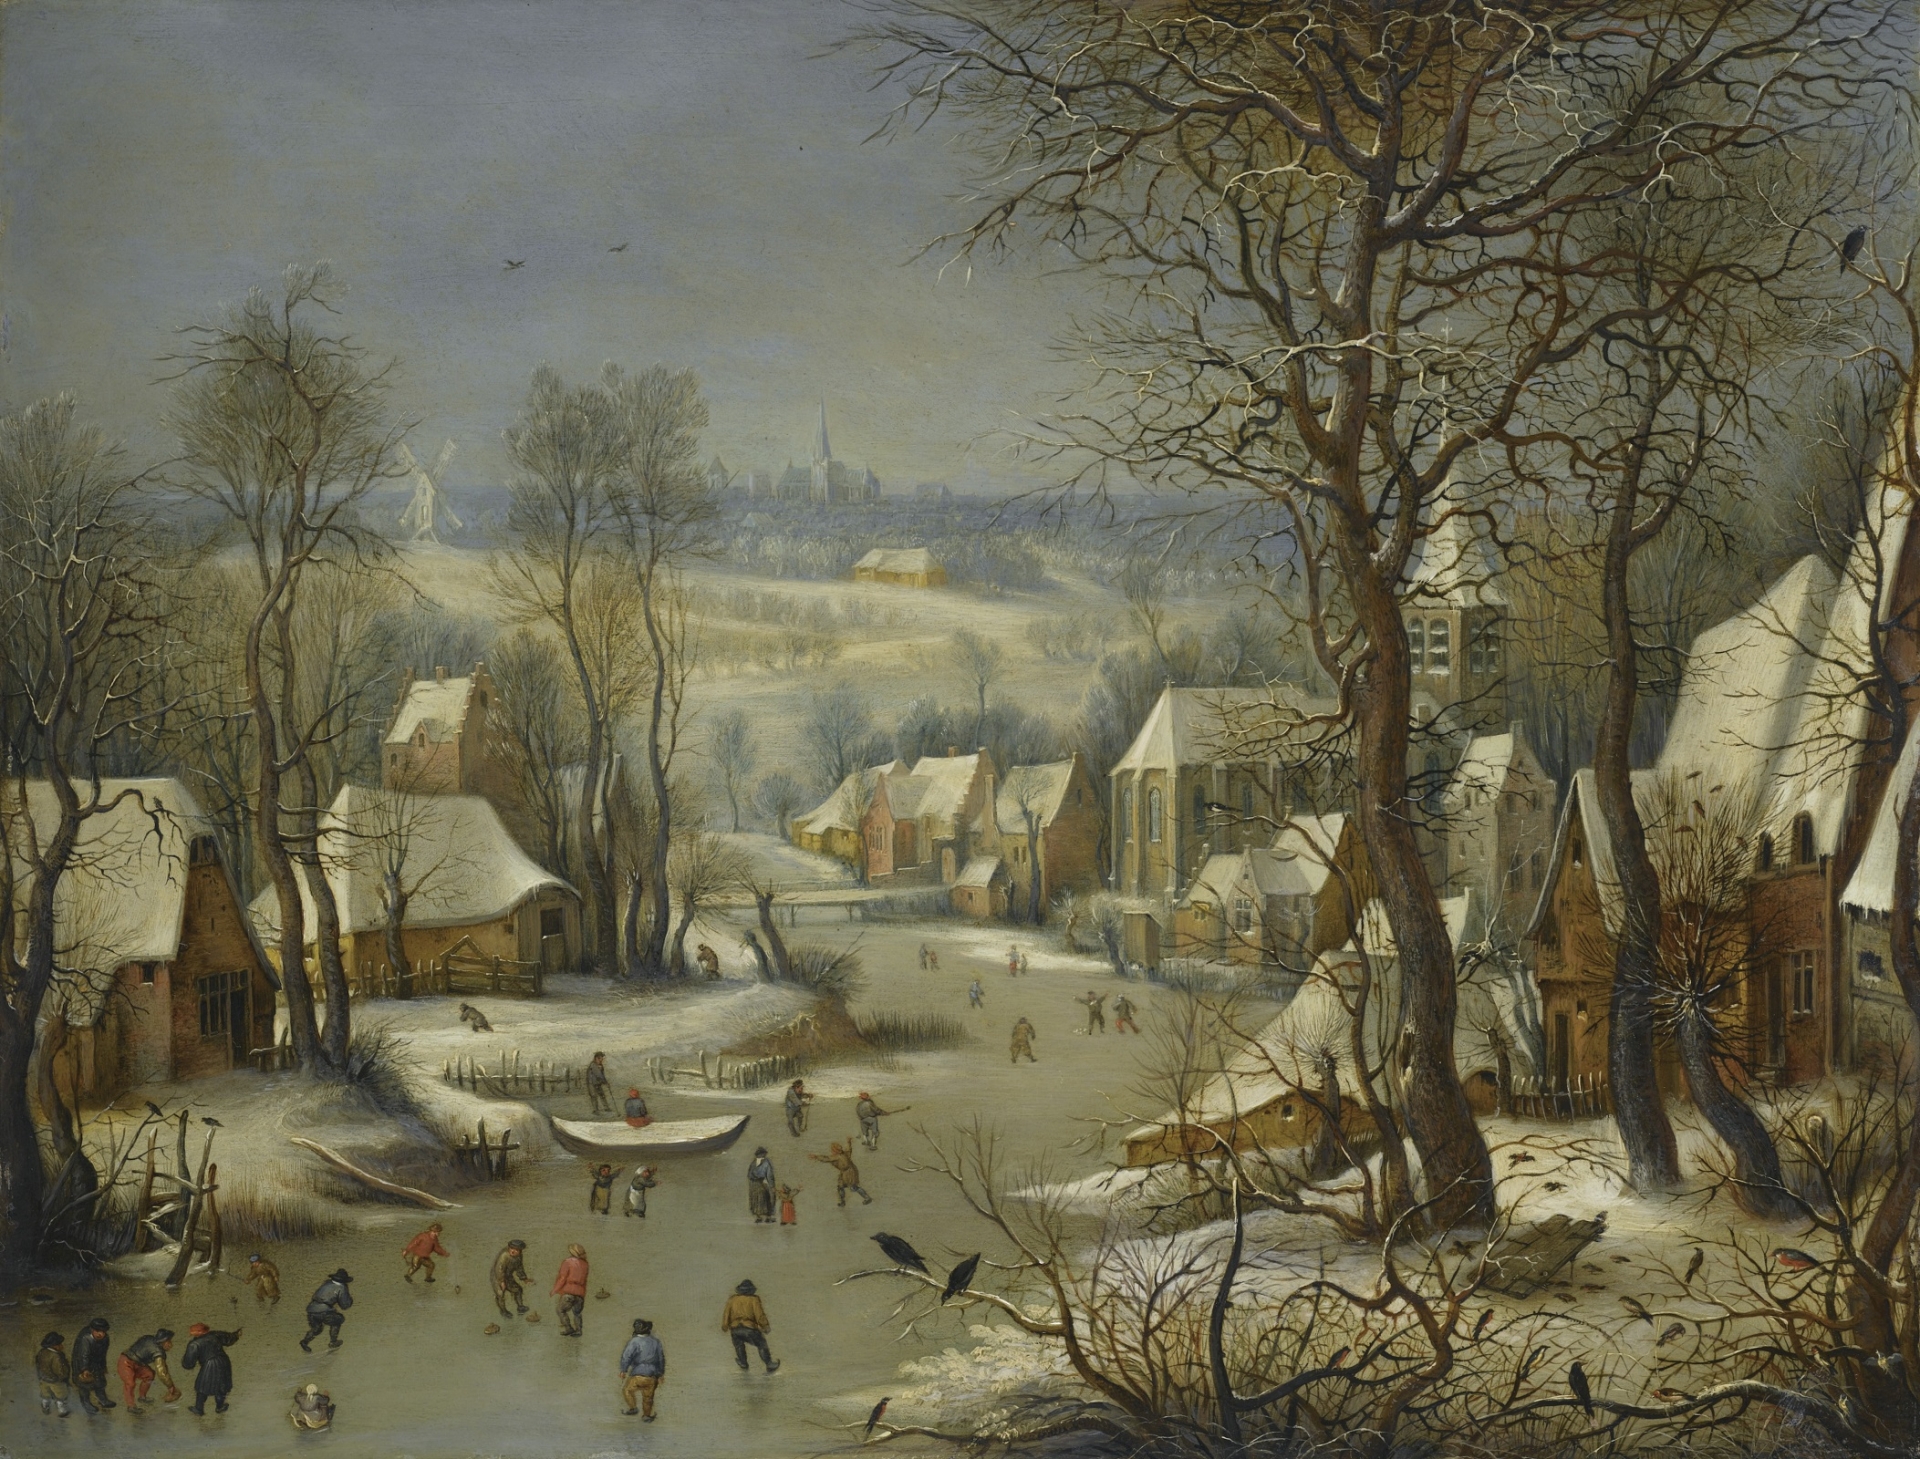 Winter by Pieter Brueghel with Antwerp in the Background